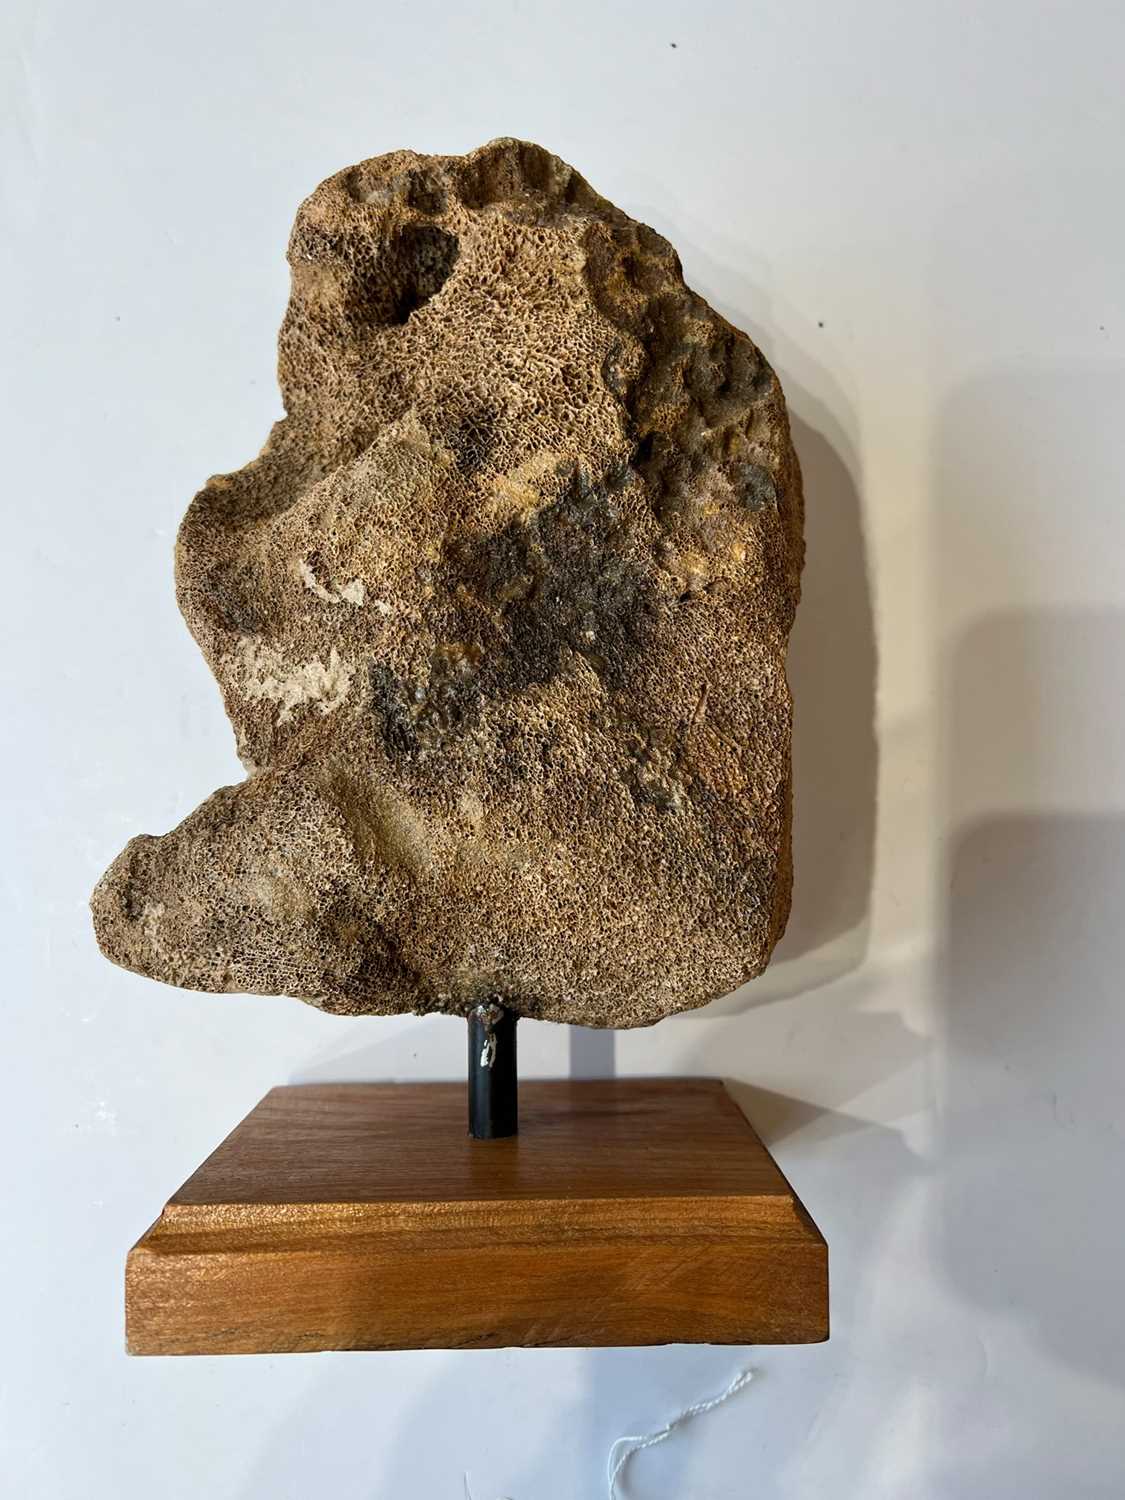 AN EXTINCT WOOLLY MAMMOTH HUMERUS HEAD BONE, 100,000 YEARS OLD - Image 3 of 3